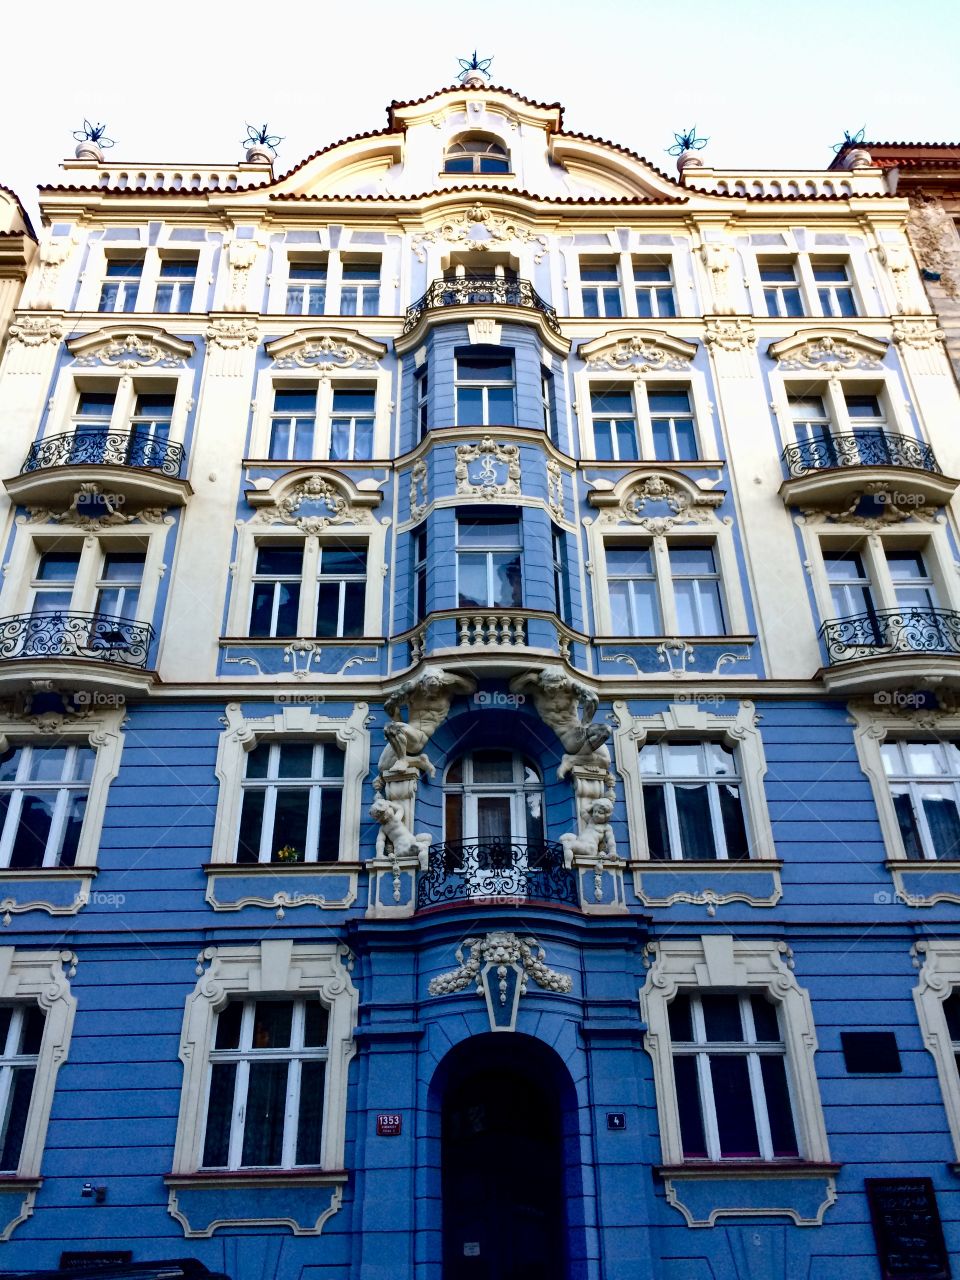 Tenement house in Praha